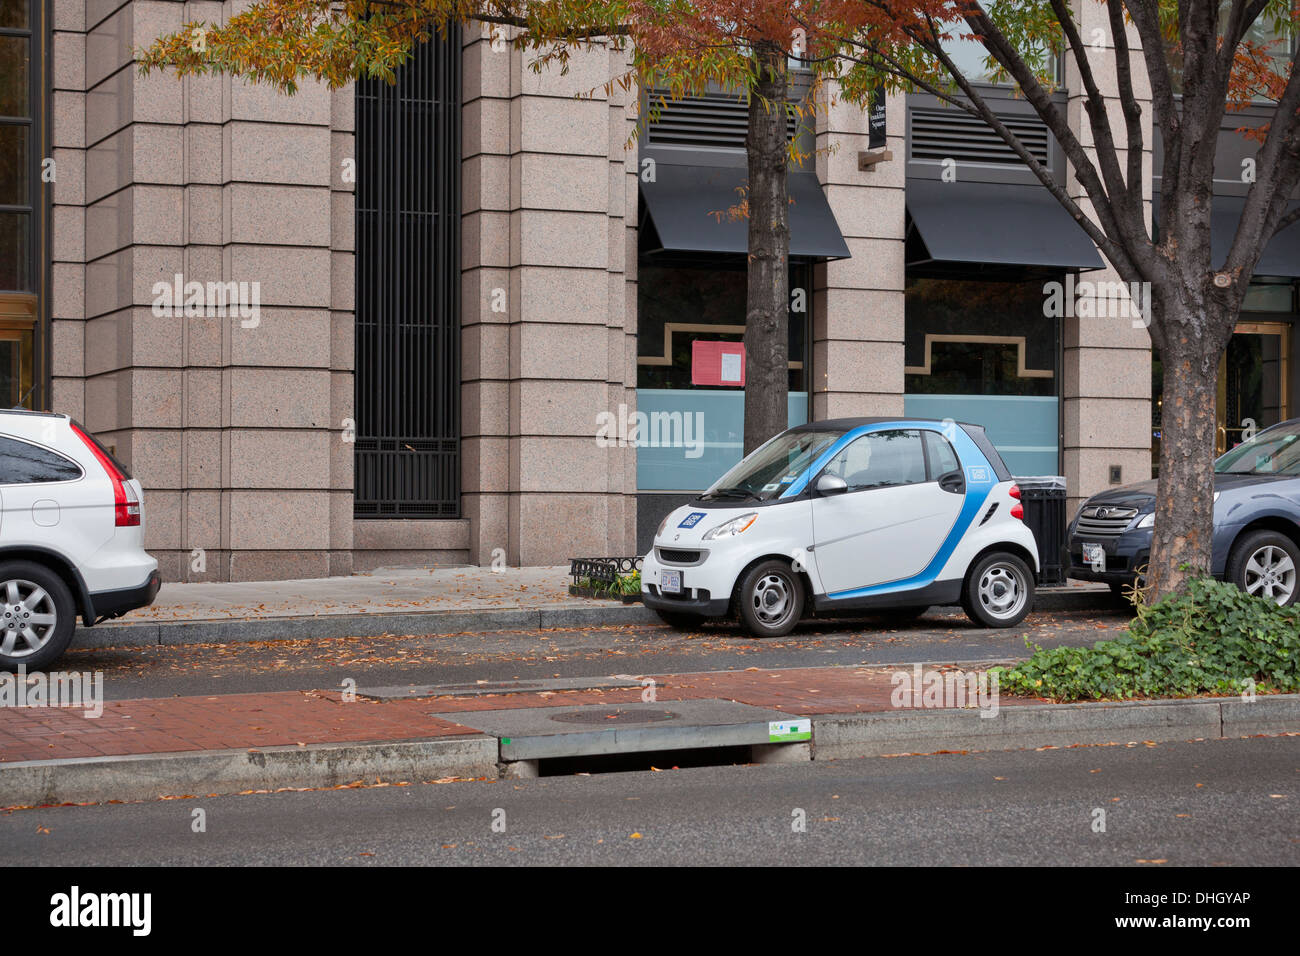 SmartCar parked on street - Washington, DC USA Stock Photo